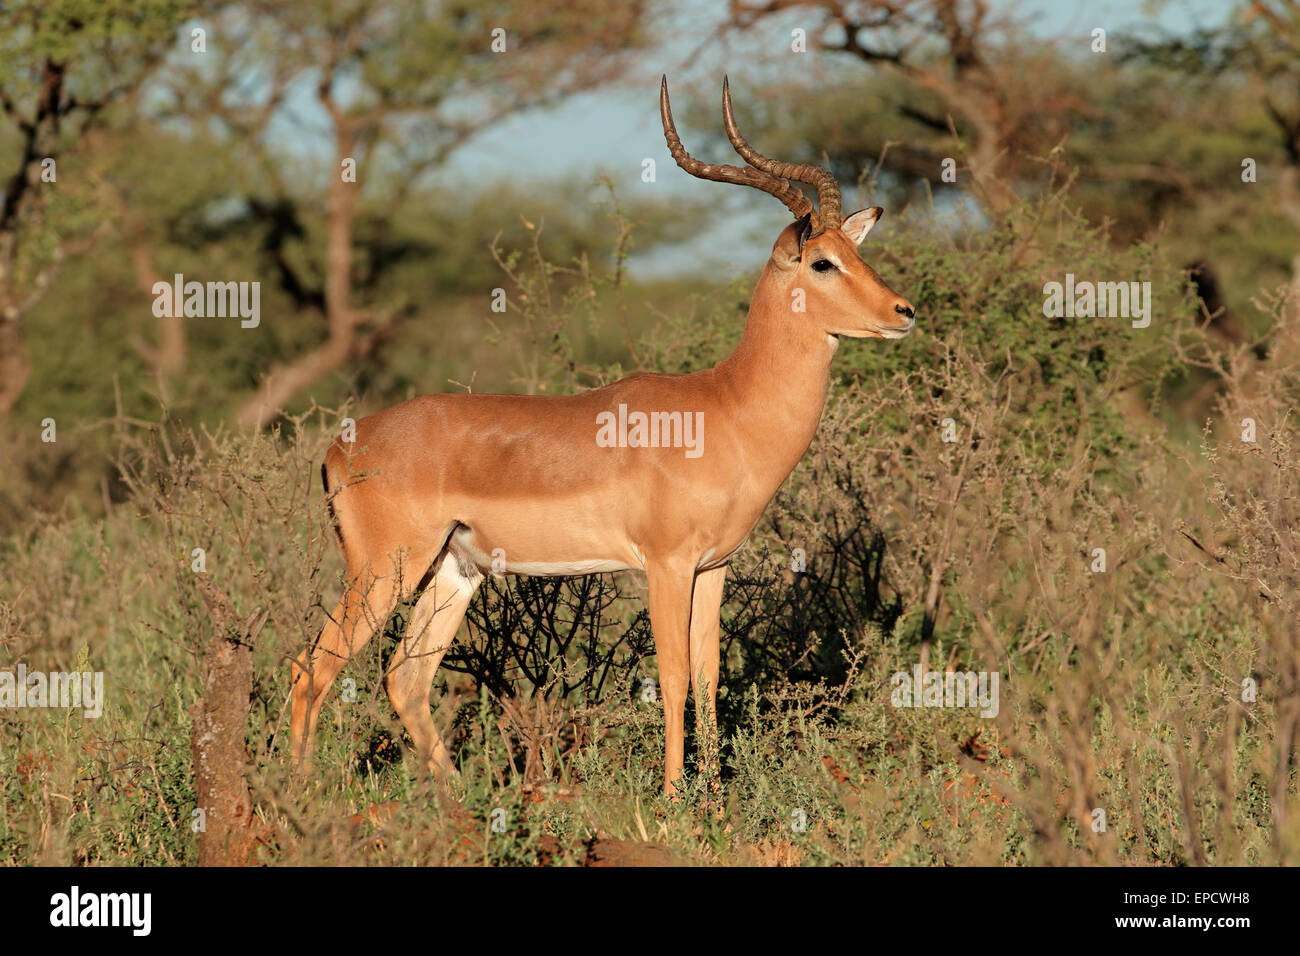 A male impala antelope (Aepyceros melampus) in natural habitat, South Africa Stock Photo